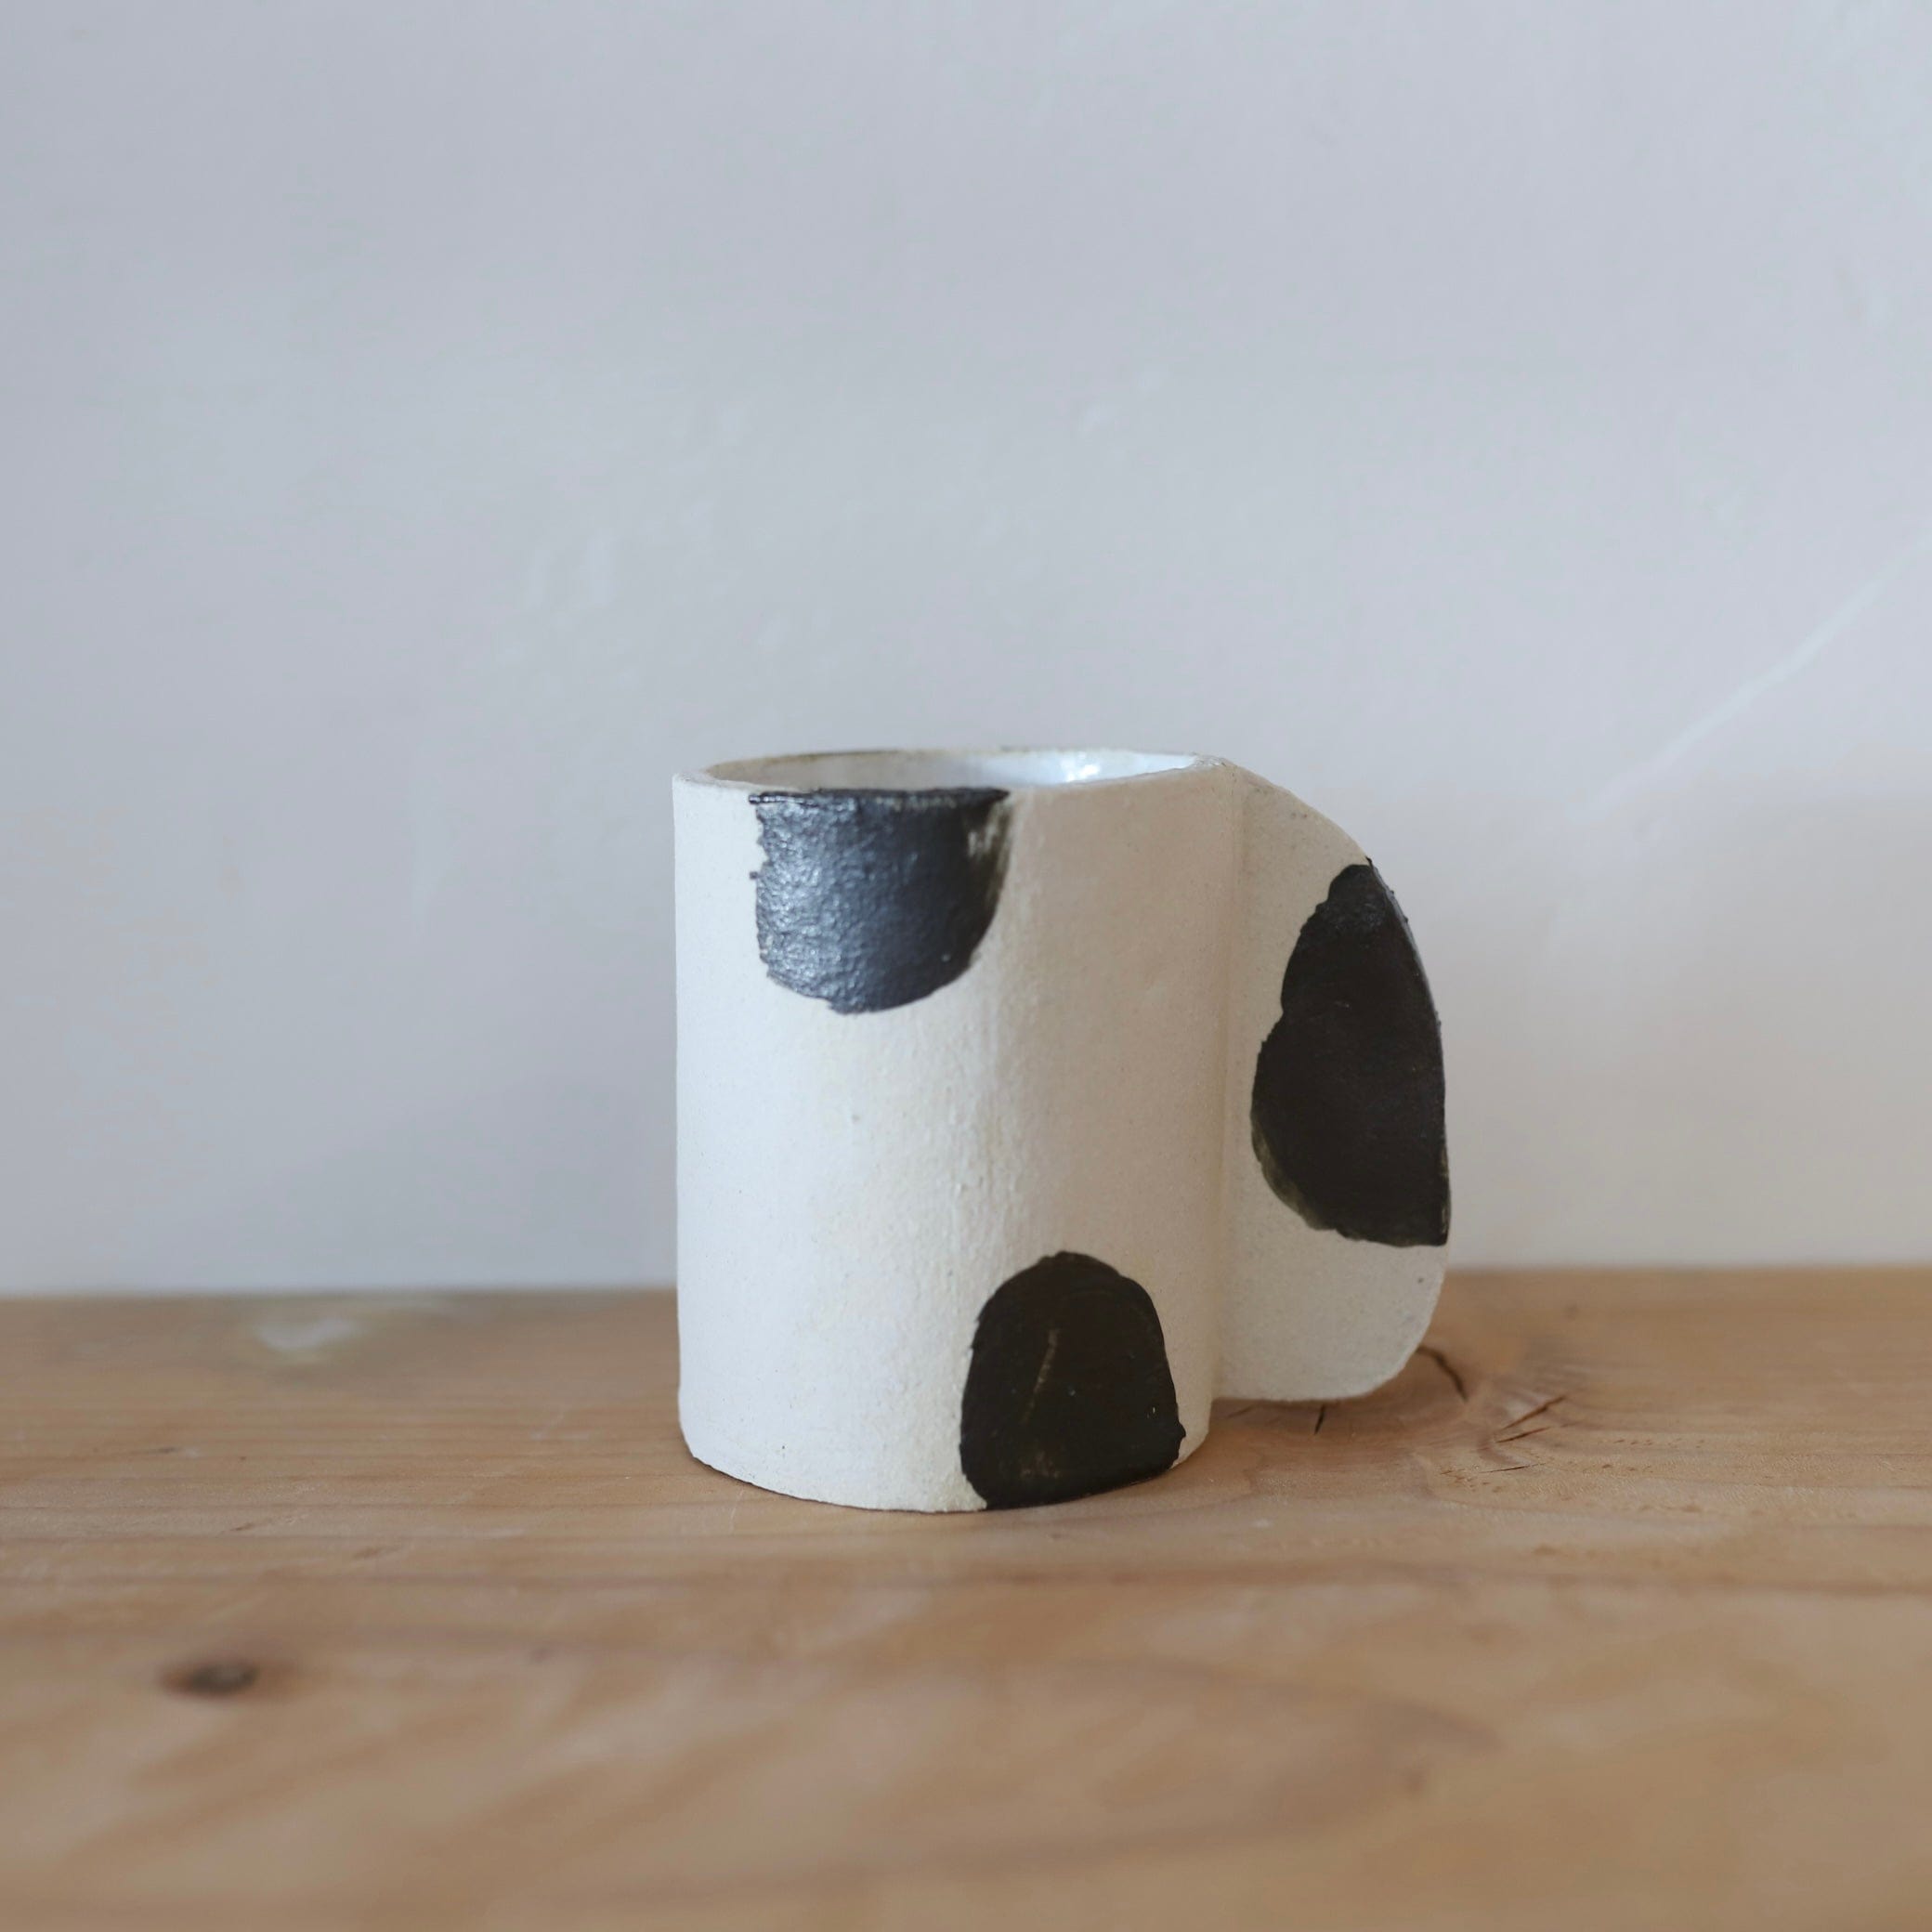 Heyja Do Kitchen F. Hand Sculpted Patterned Ceramic Mugs | Heyja Do